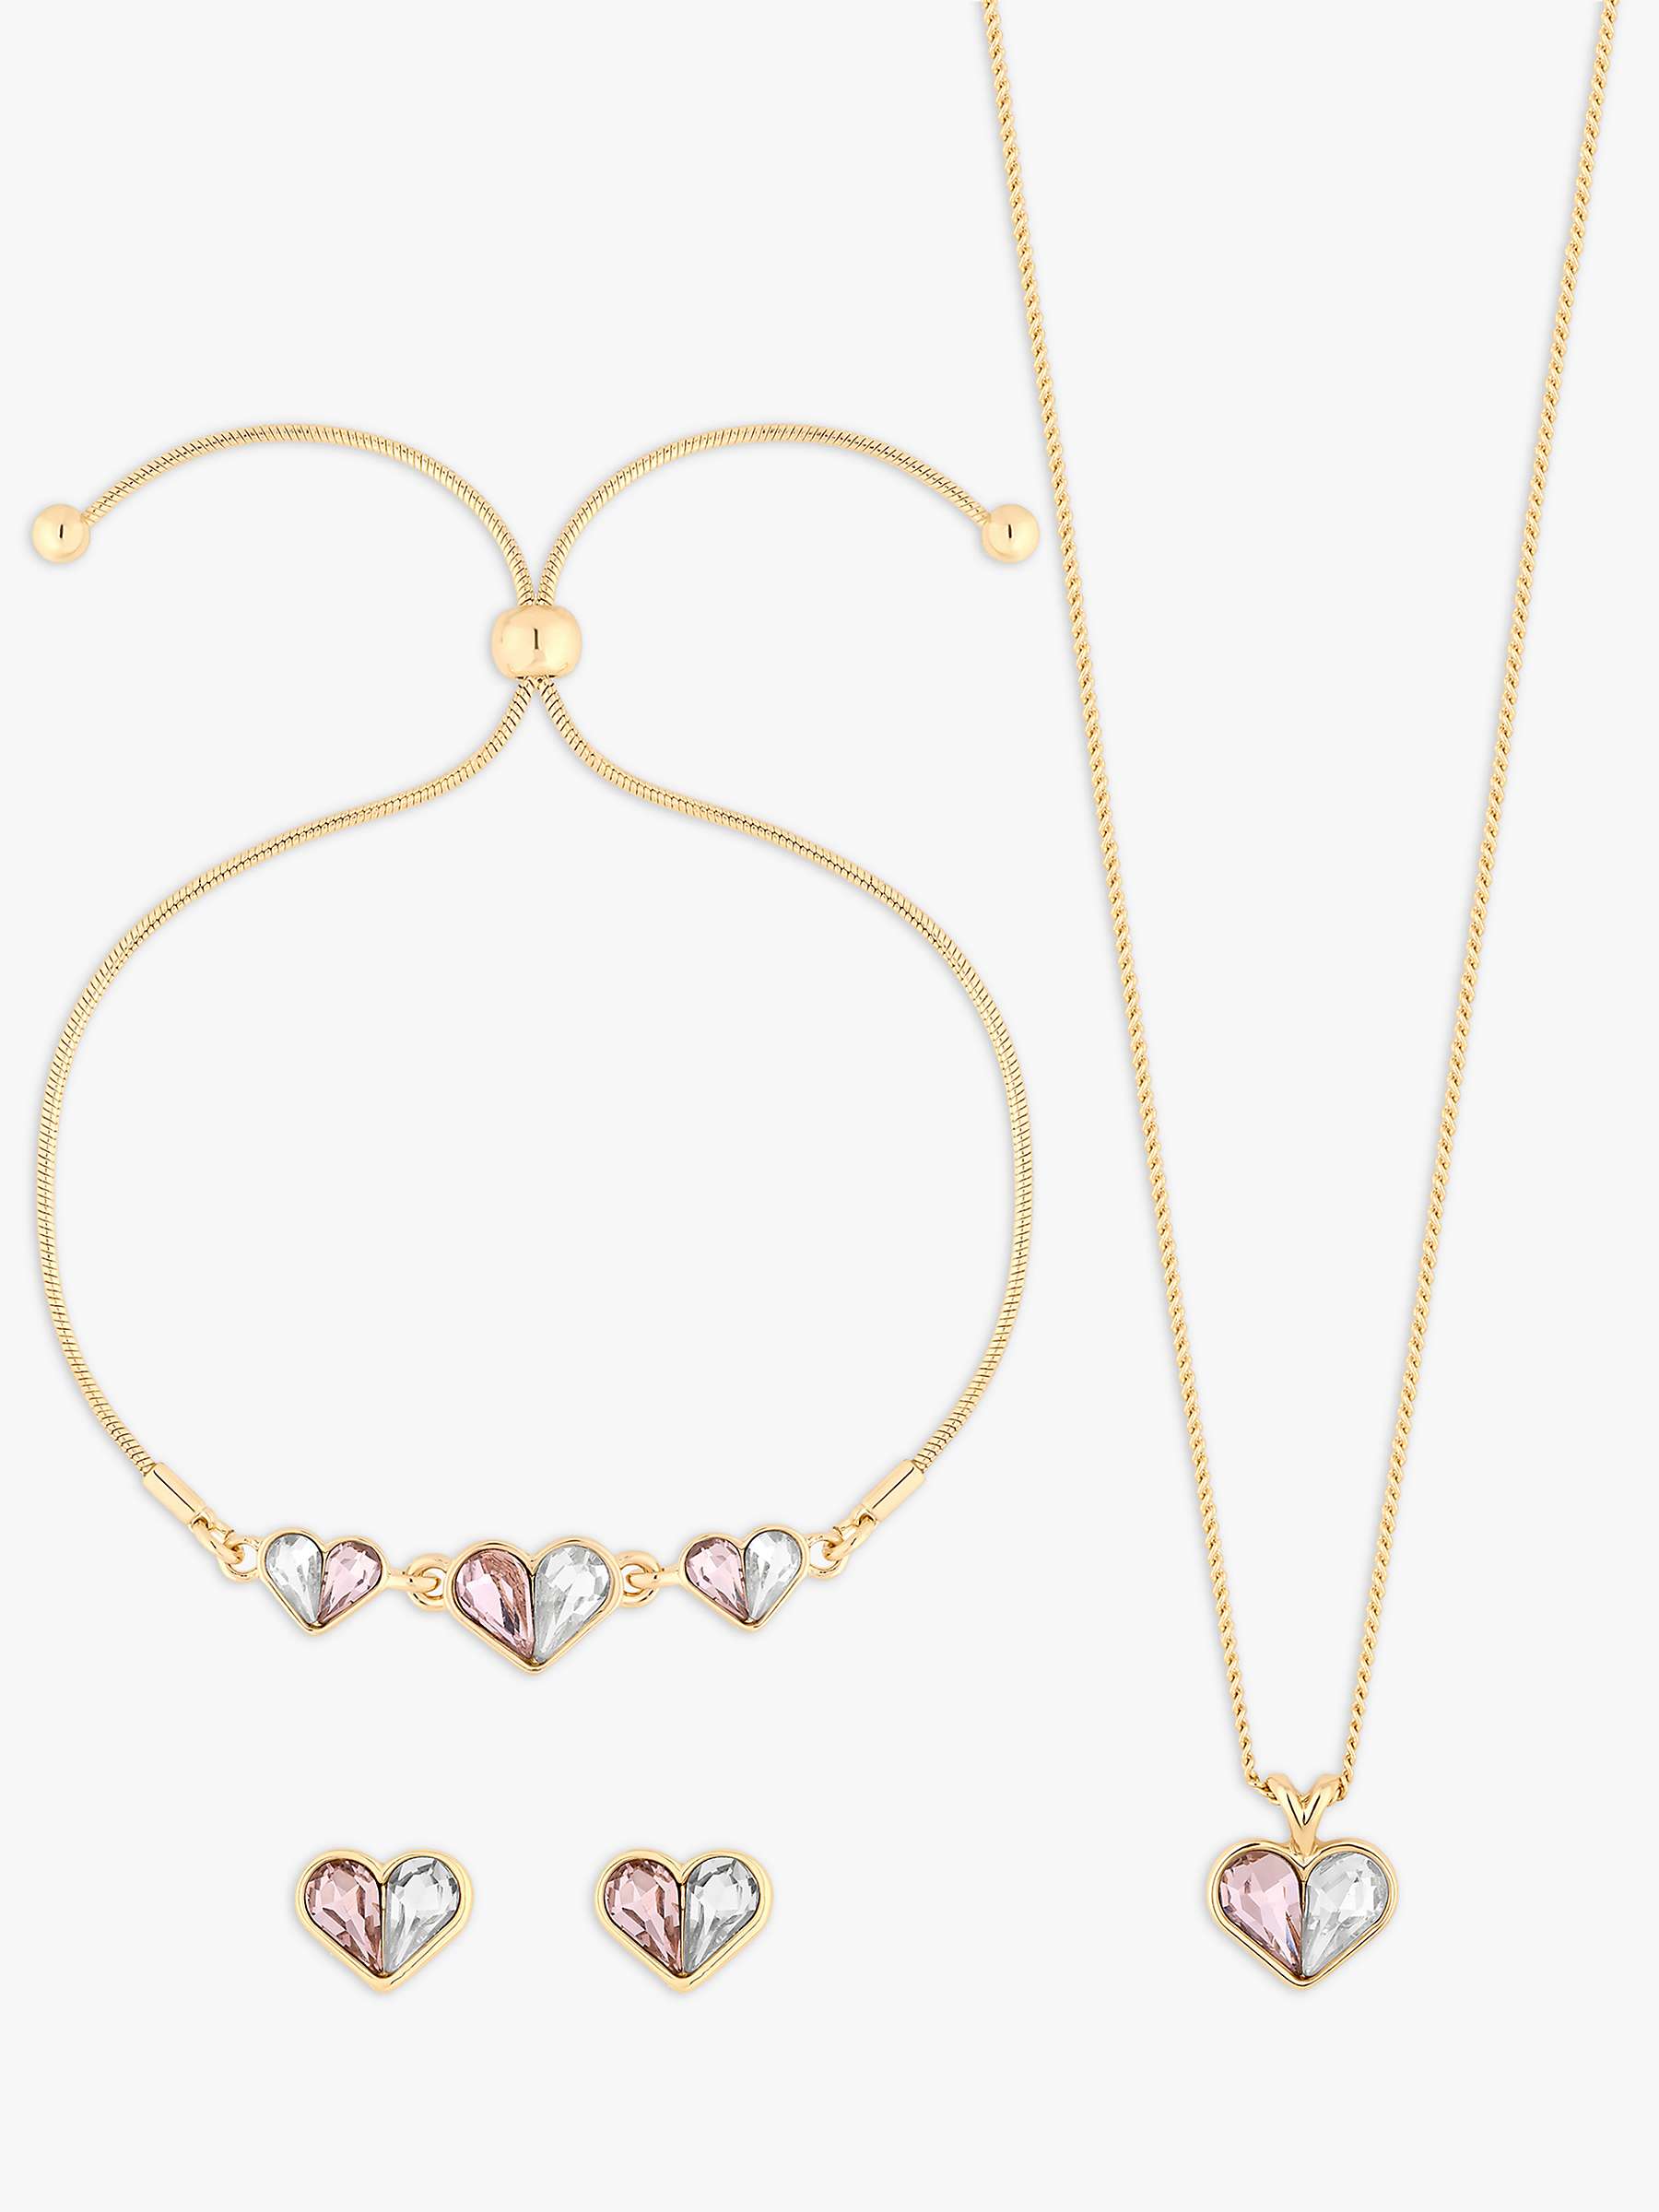 Buy Jon Richard Crystal Heart Pendant Necklace, Stud Earrings & Bracelet Jewellery Set, Gold Online at johnlewis.com